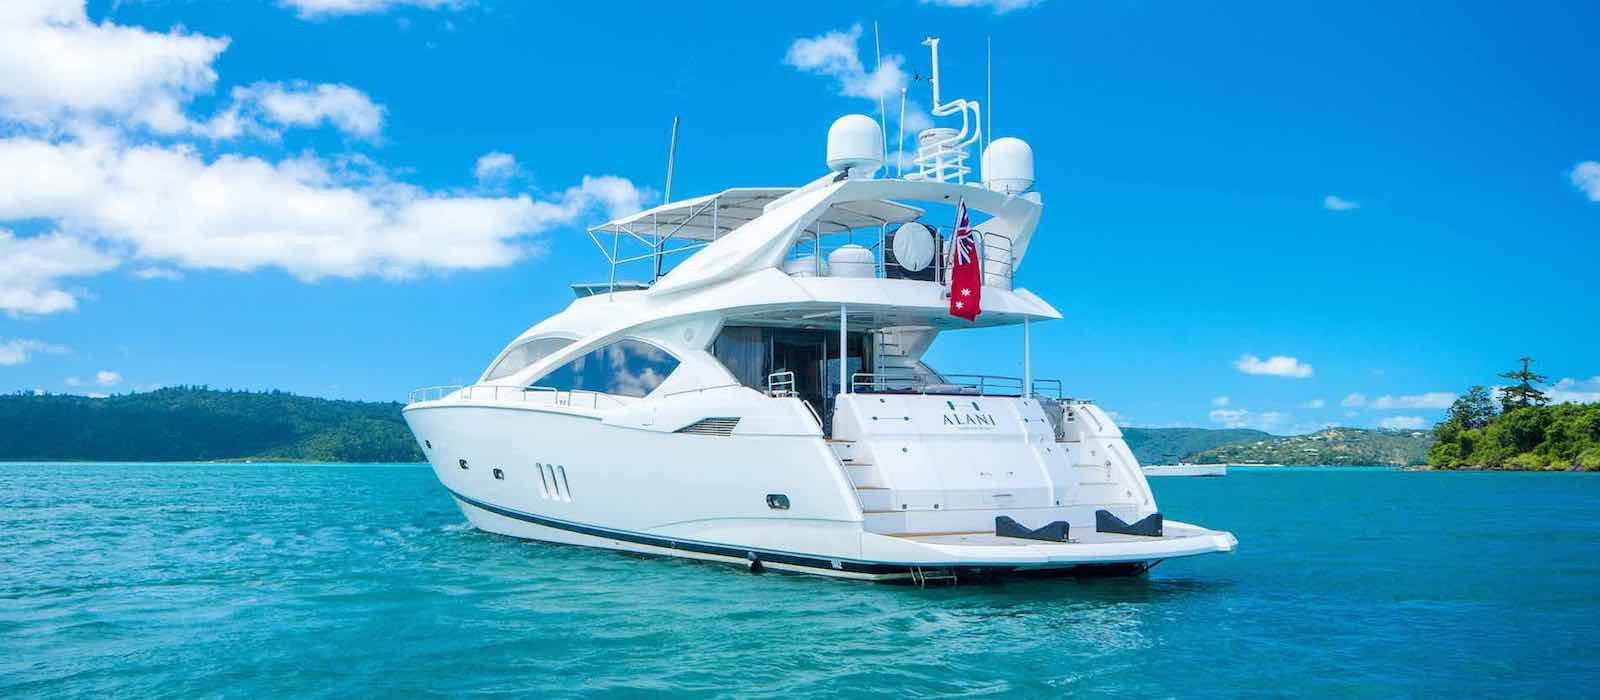 Alani luxury boat hire stern view